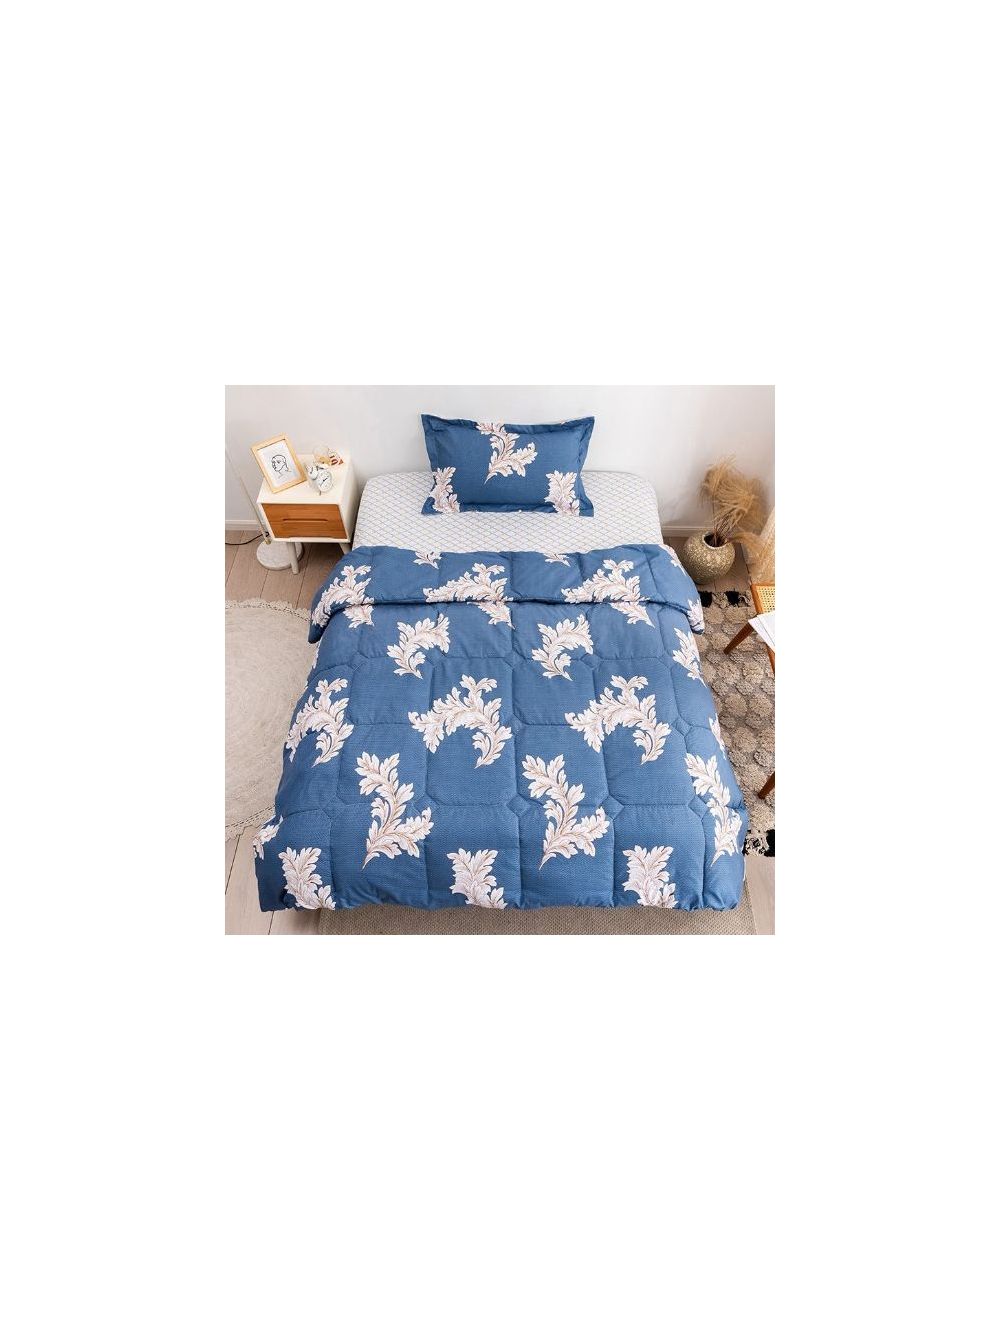 Rishahome 3 Piece Single Size Comforter Set Microfiber Blue 150x200 cm-PBLCS0003